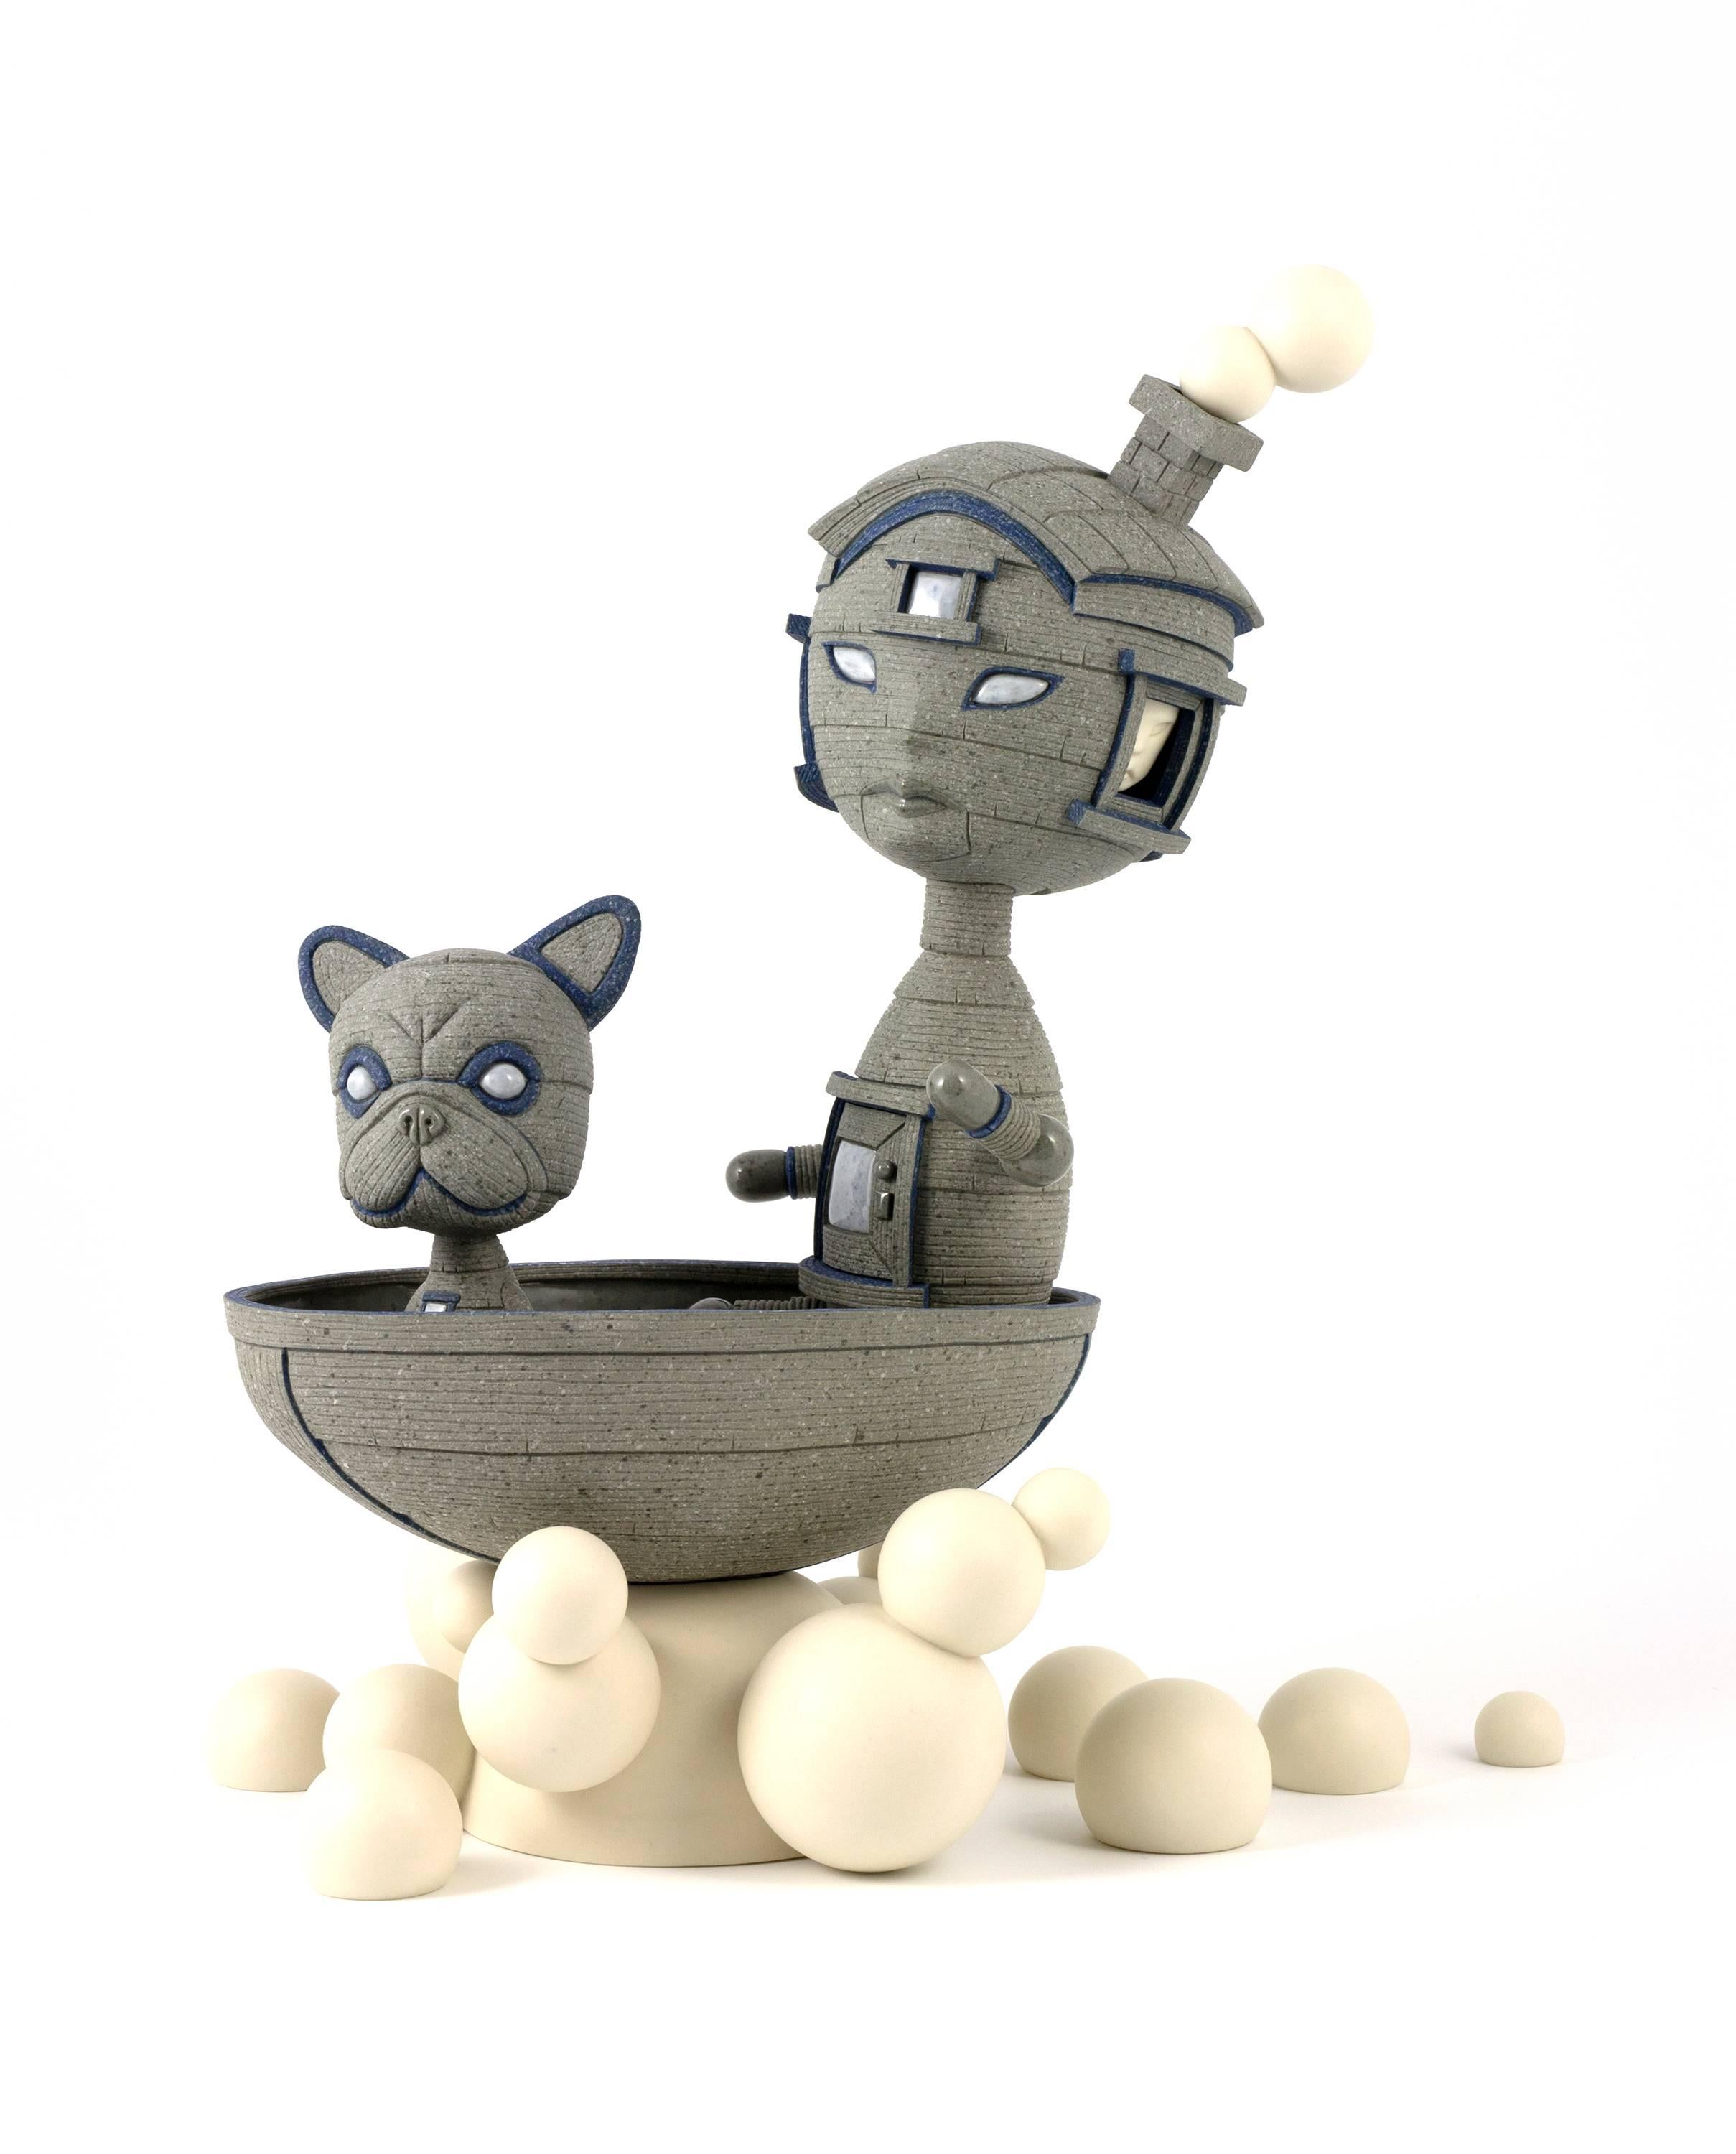 Calvin Ma Figurative Sculpture - "Take It On", Porcelain and Stoneware Ceramic Sculpture